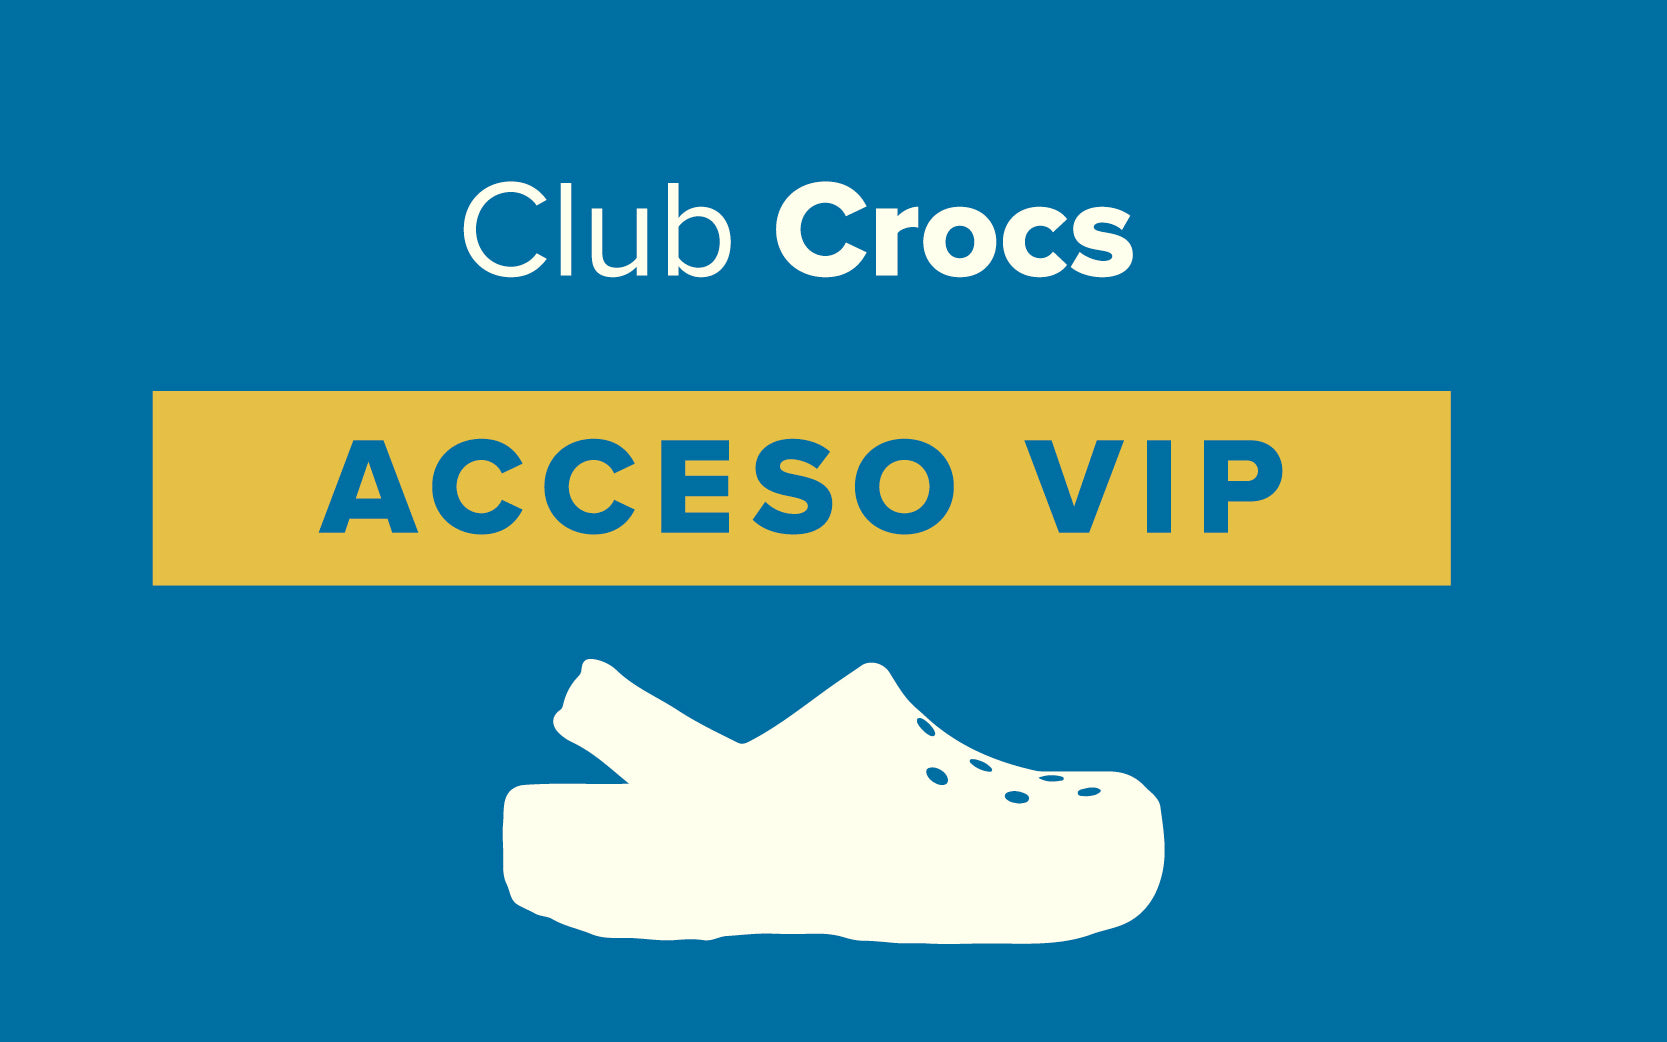 Club Crocs Acceso VIP